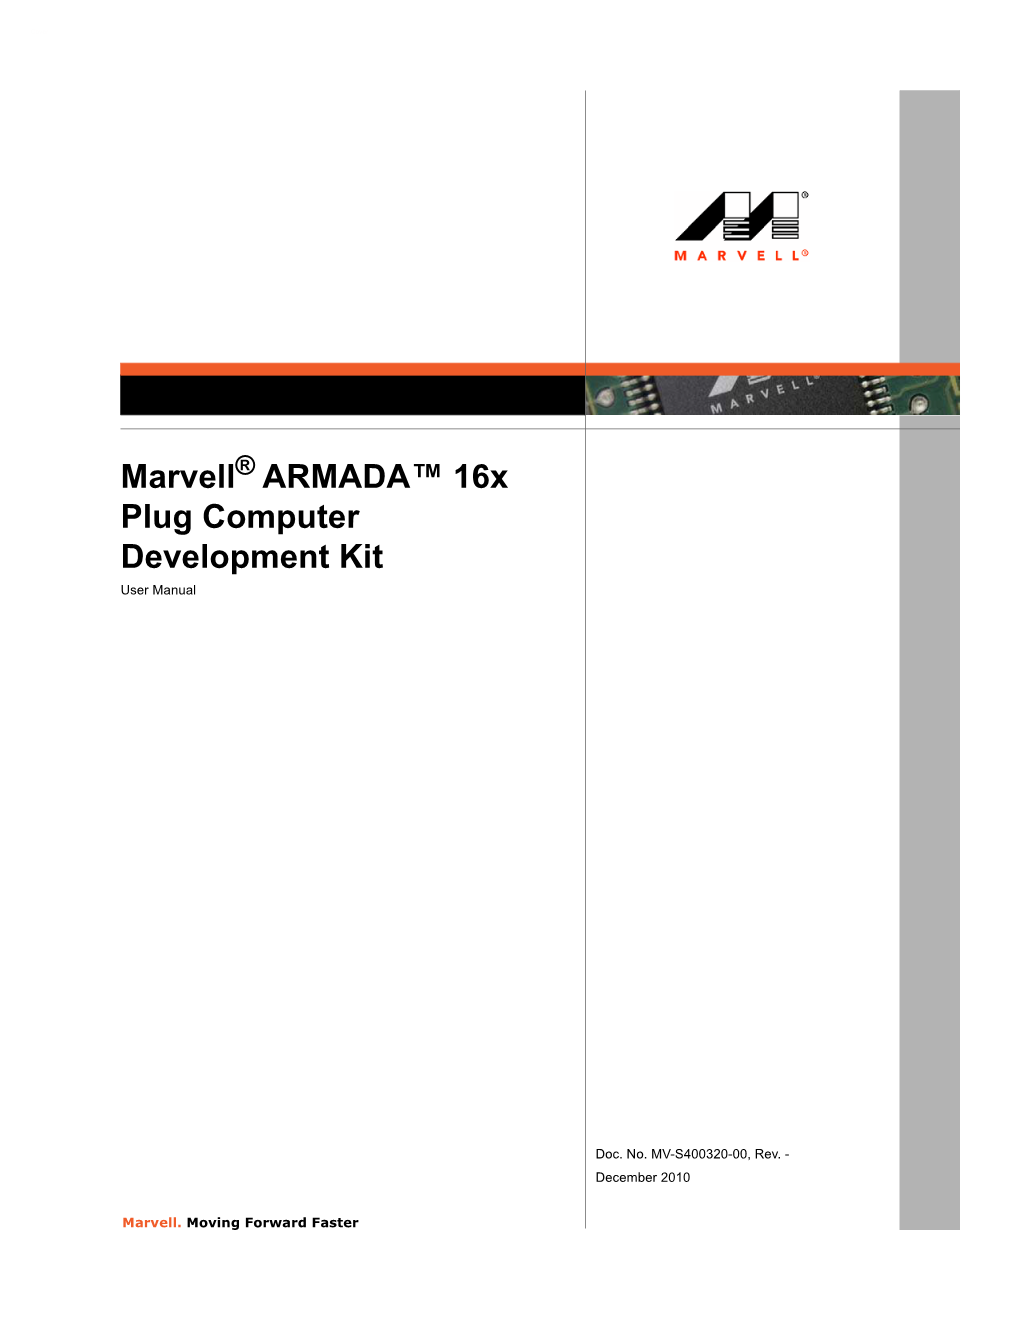 Marvell ARMADA™ 16X Plug Computer Development